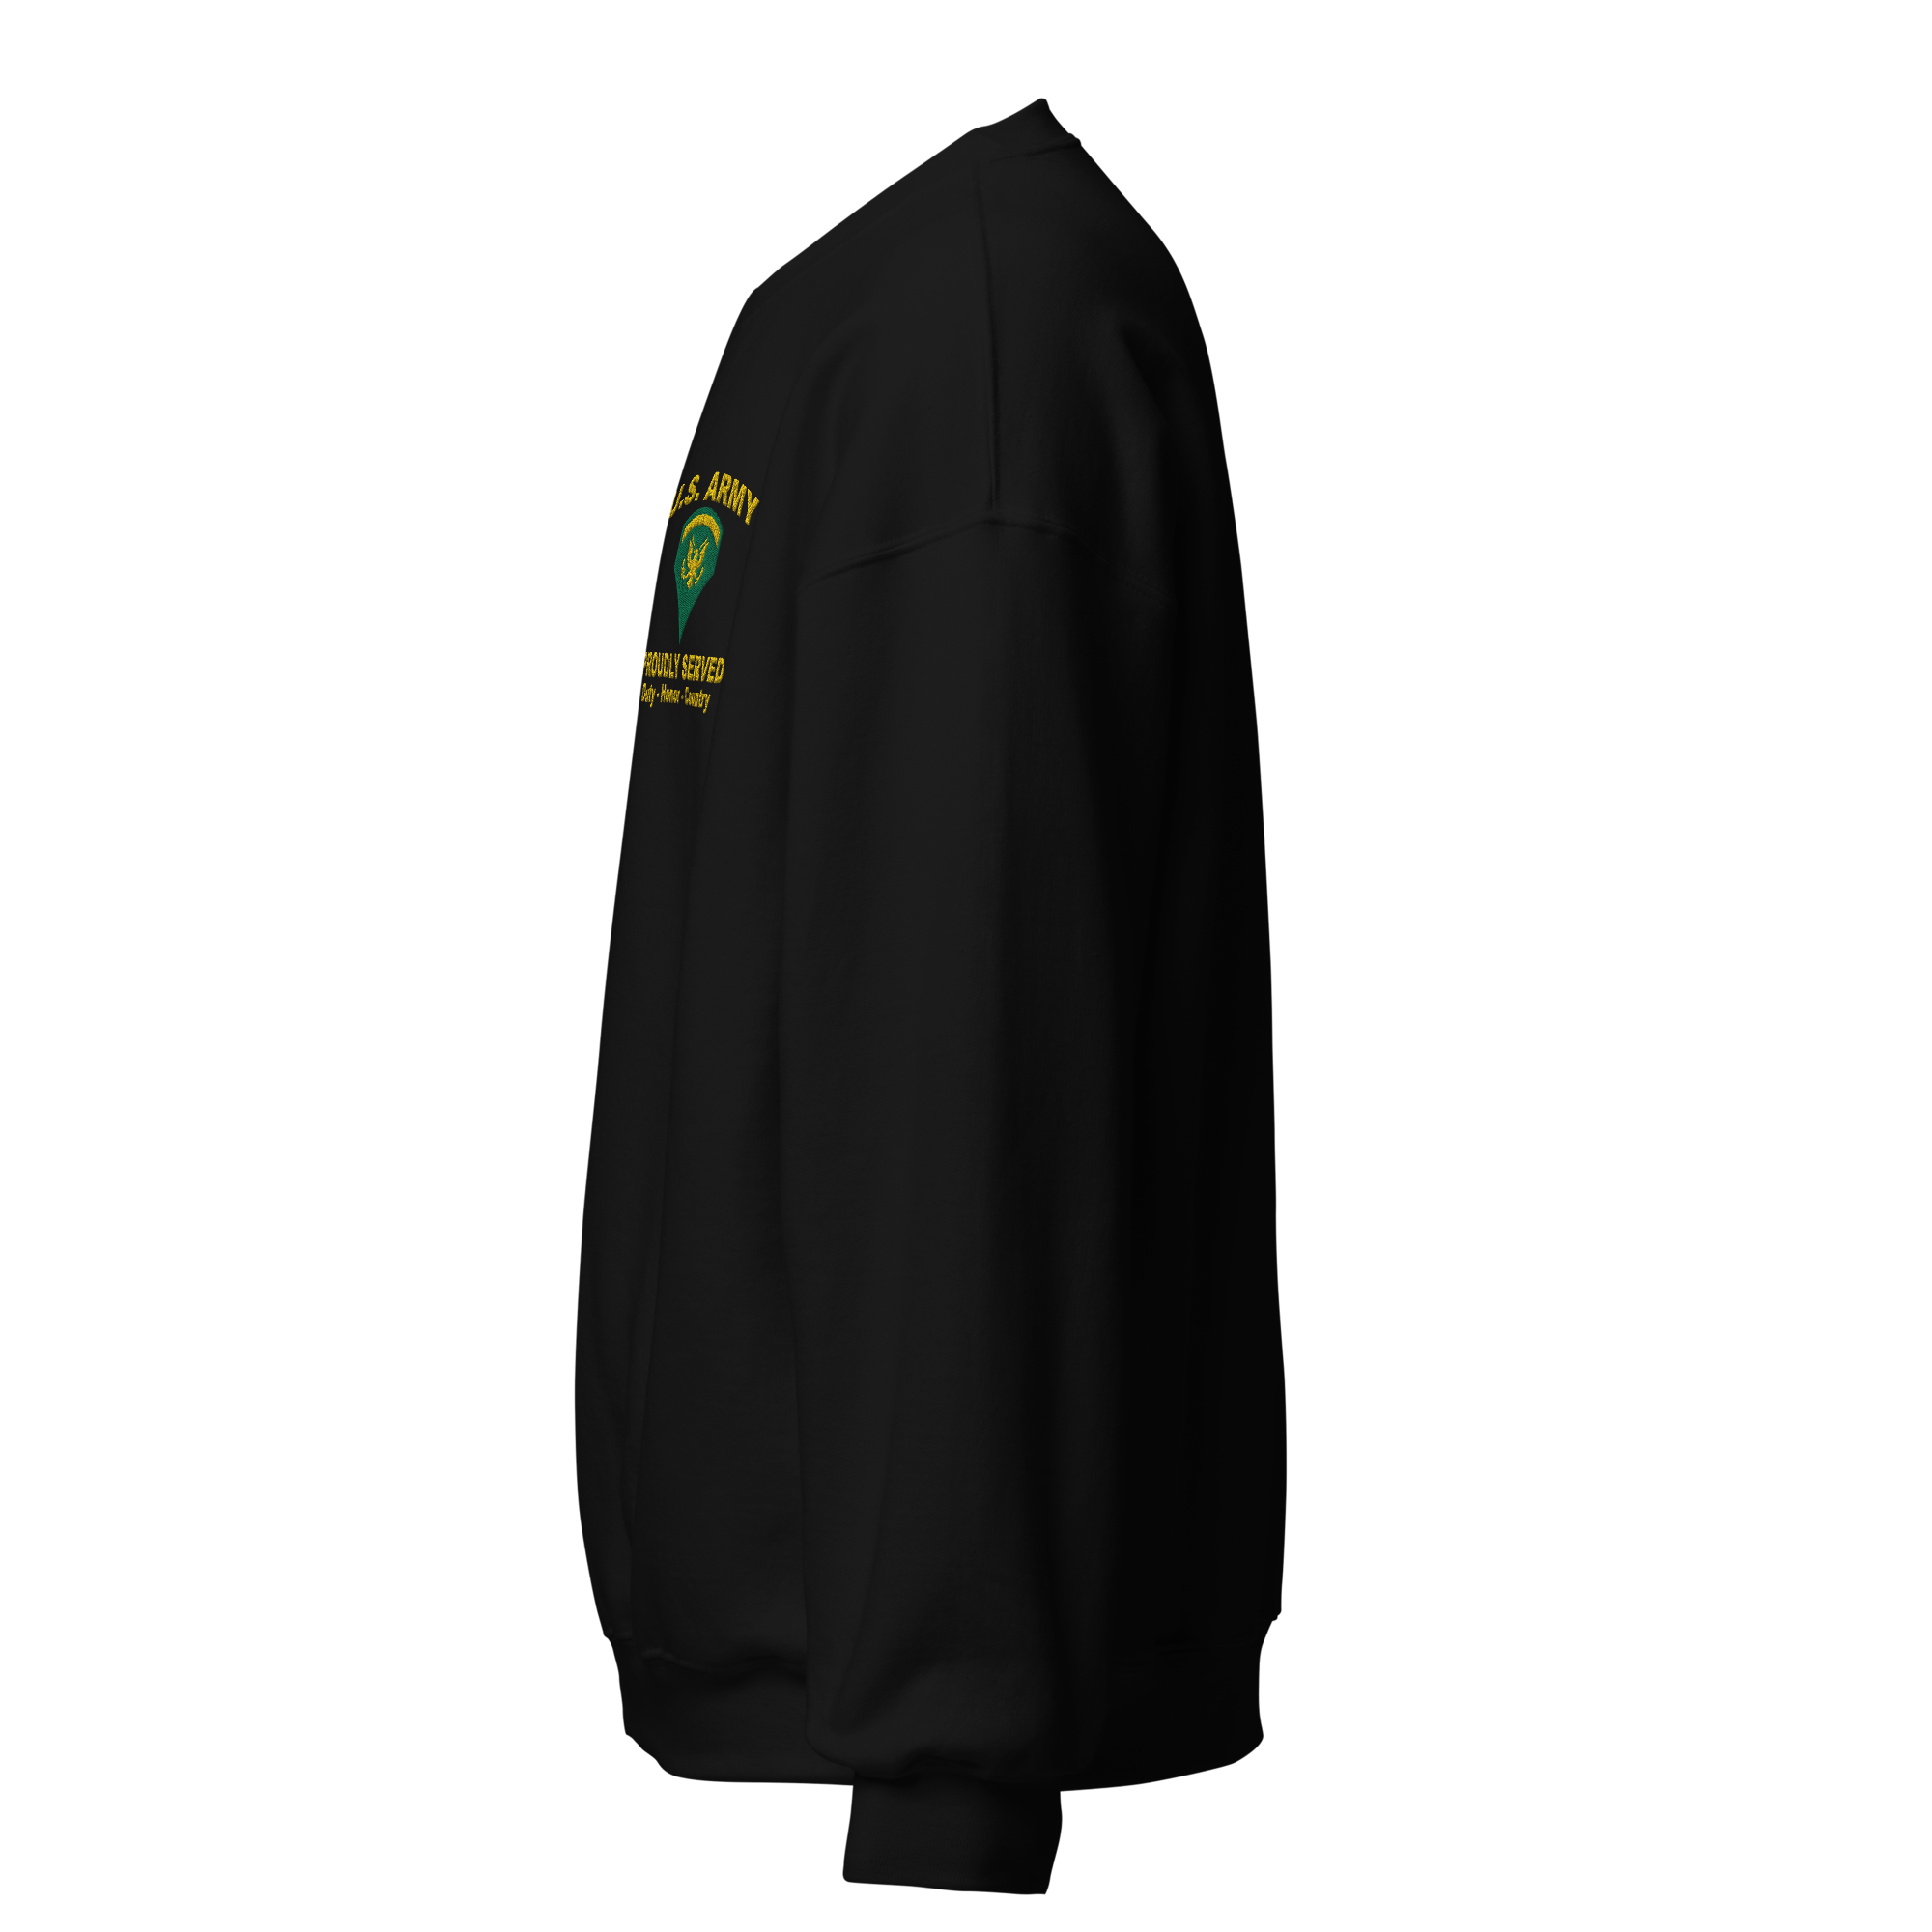 Custom US Army Ranks, Insignia Core Values Embroidered Unisex Sweatshirt